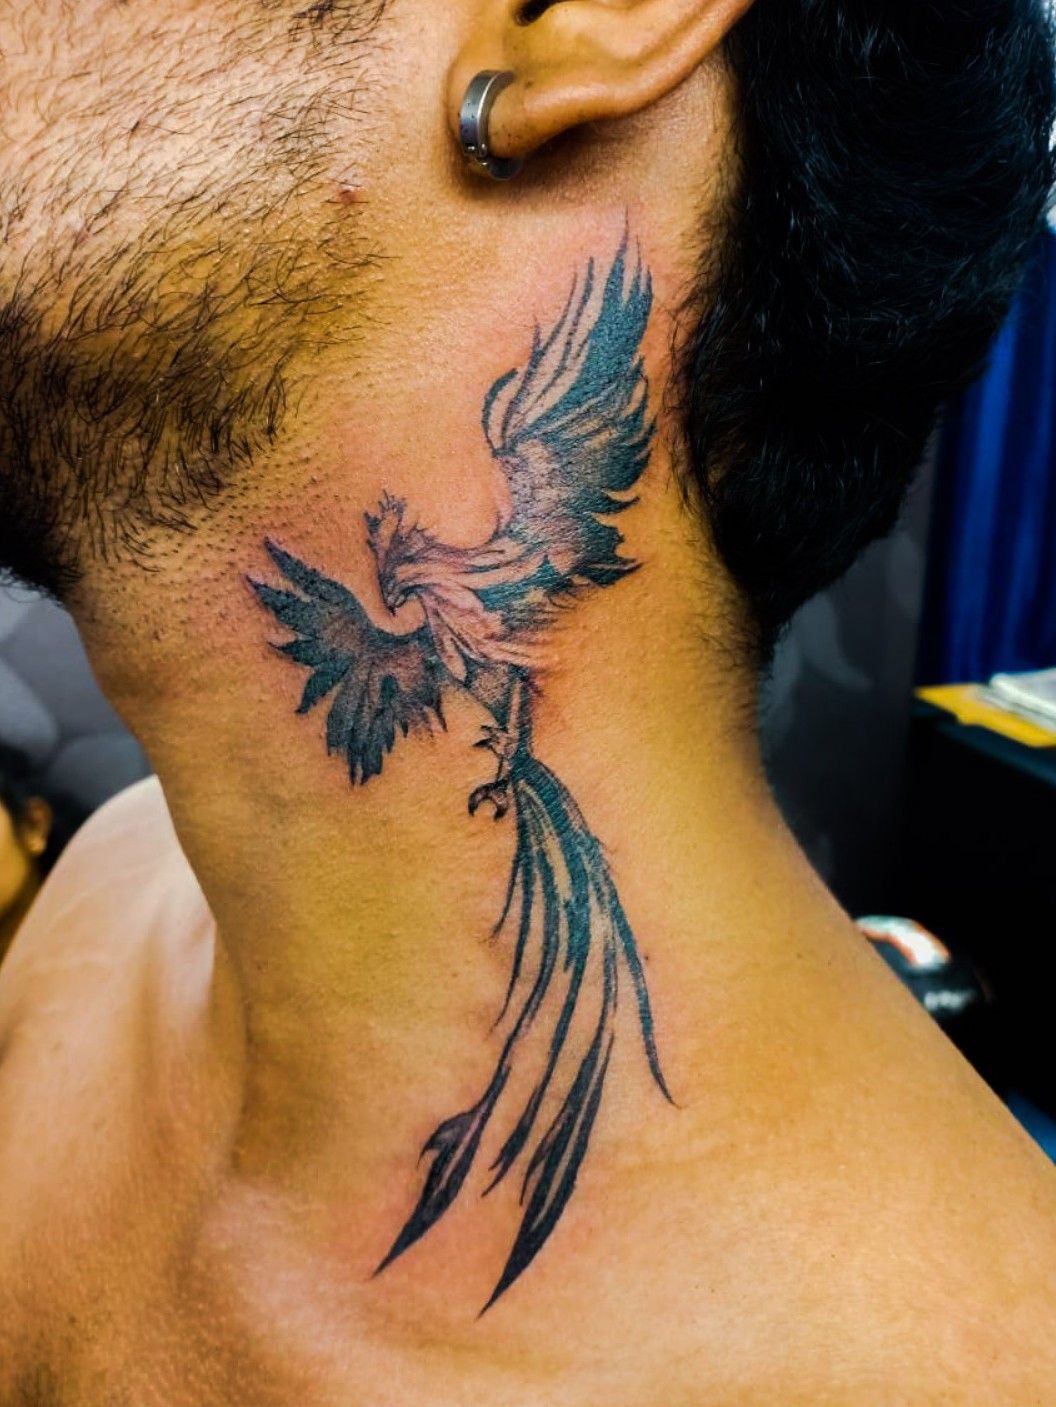 Buy Phoenix Temporary Tattoo  Animal Tattoo  Bird Tattoo Online in India   Etsy